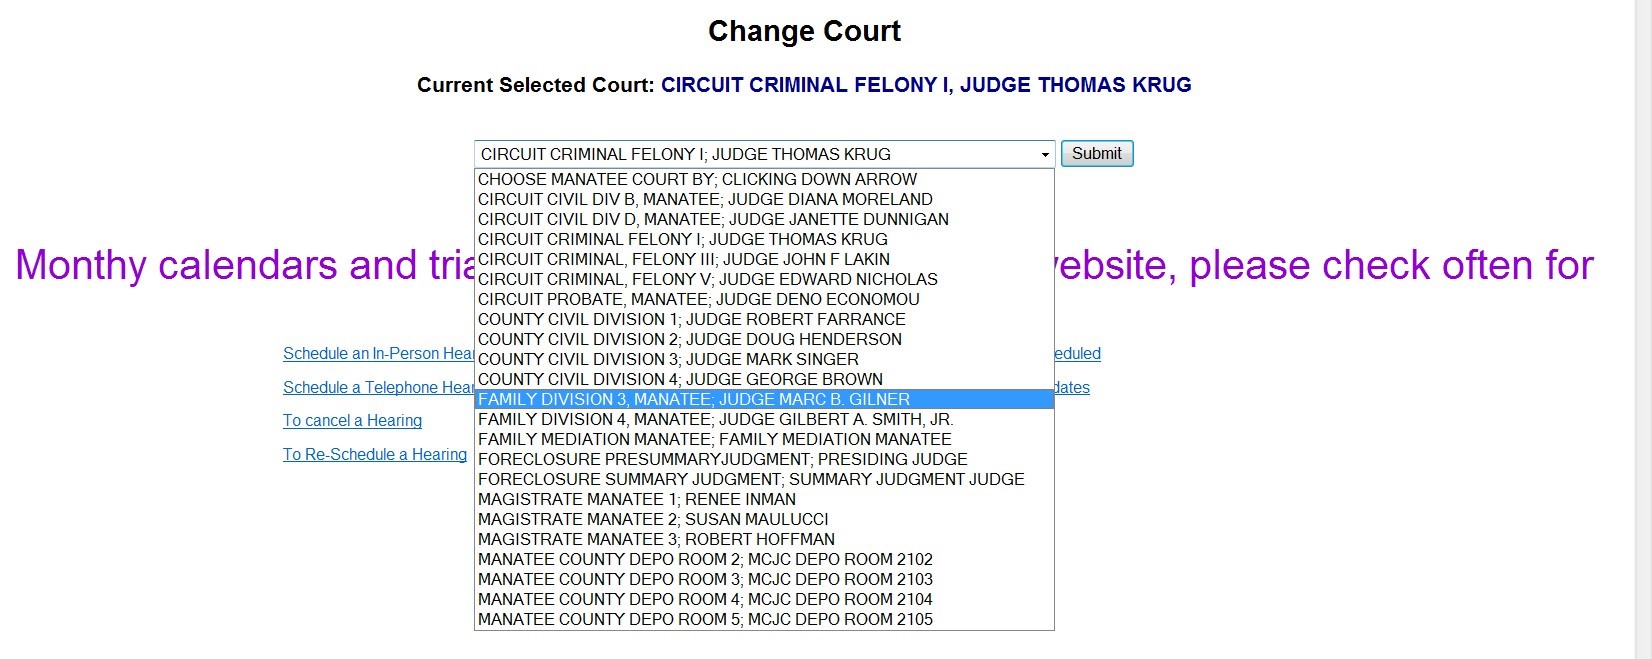 Change Court form